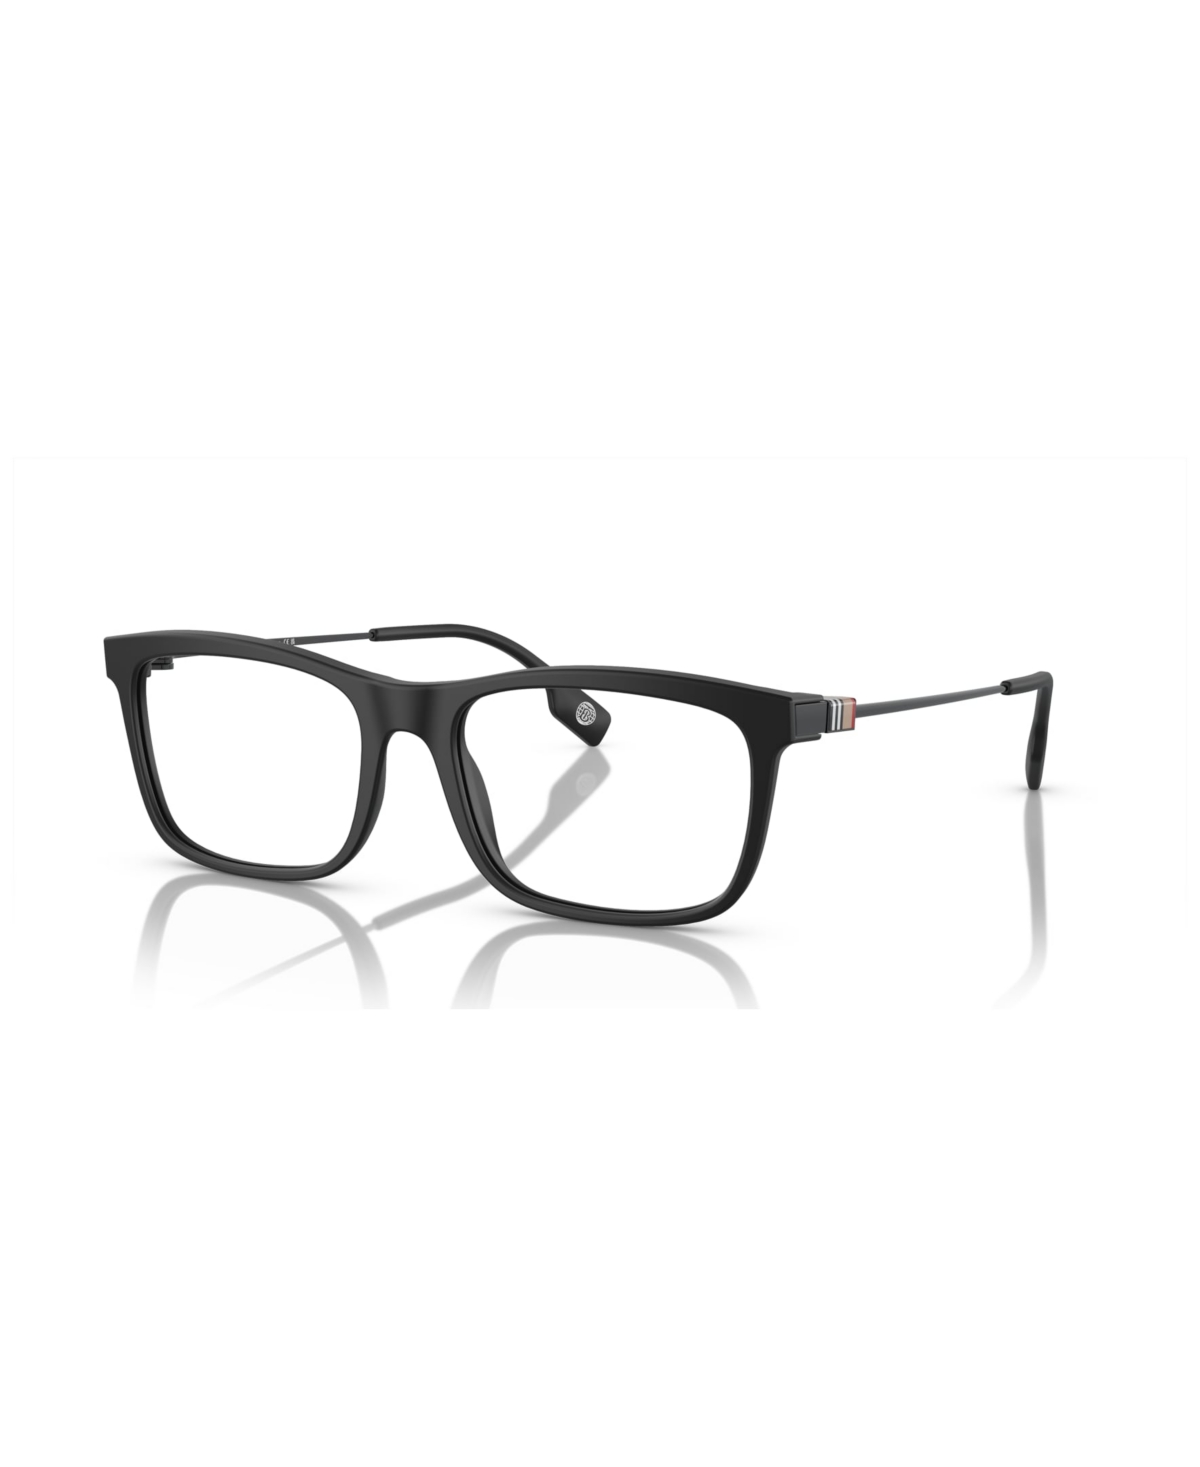 Men's Eyeglasses, BE2384 - Dark Havana